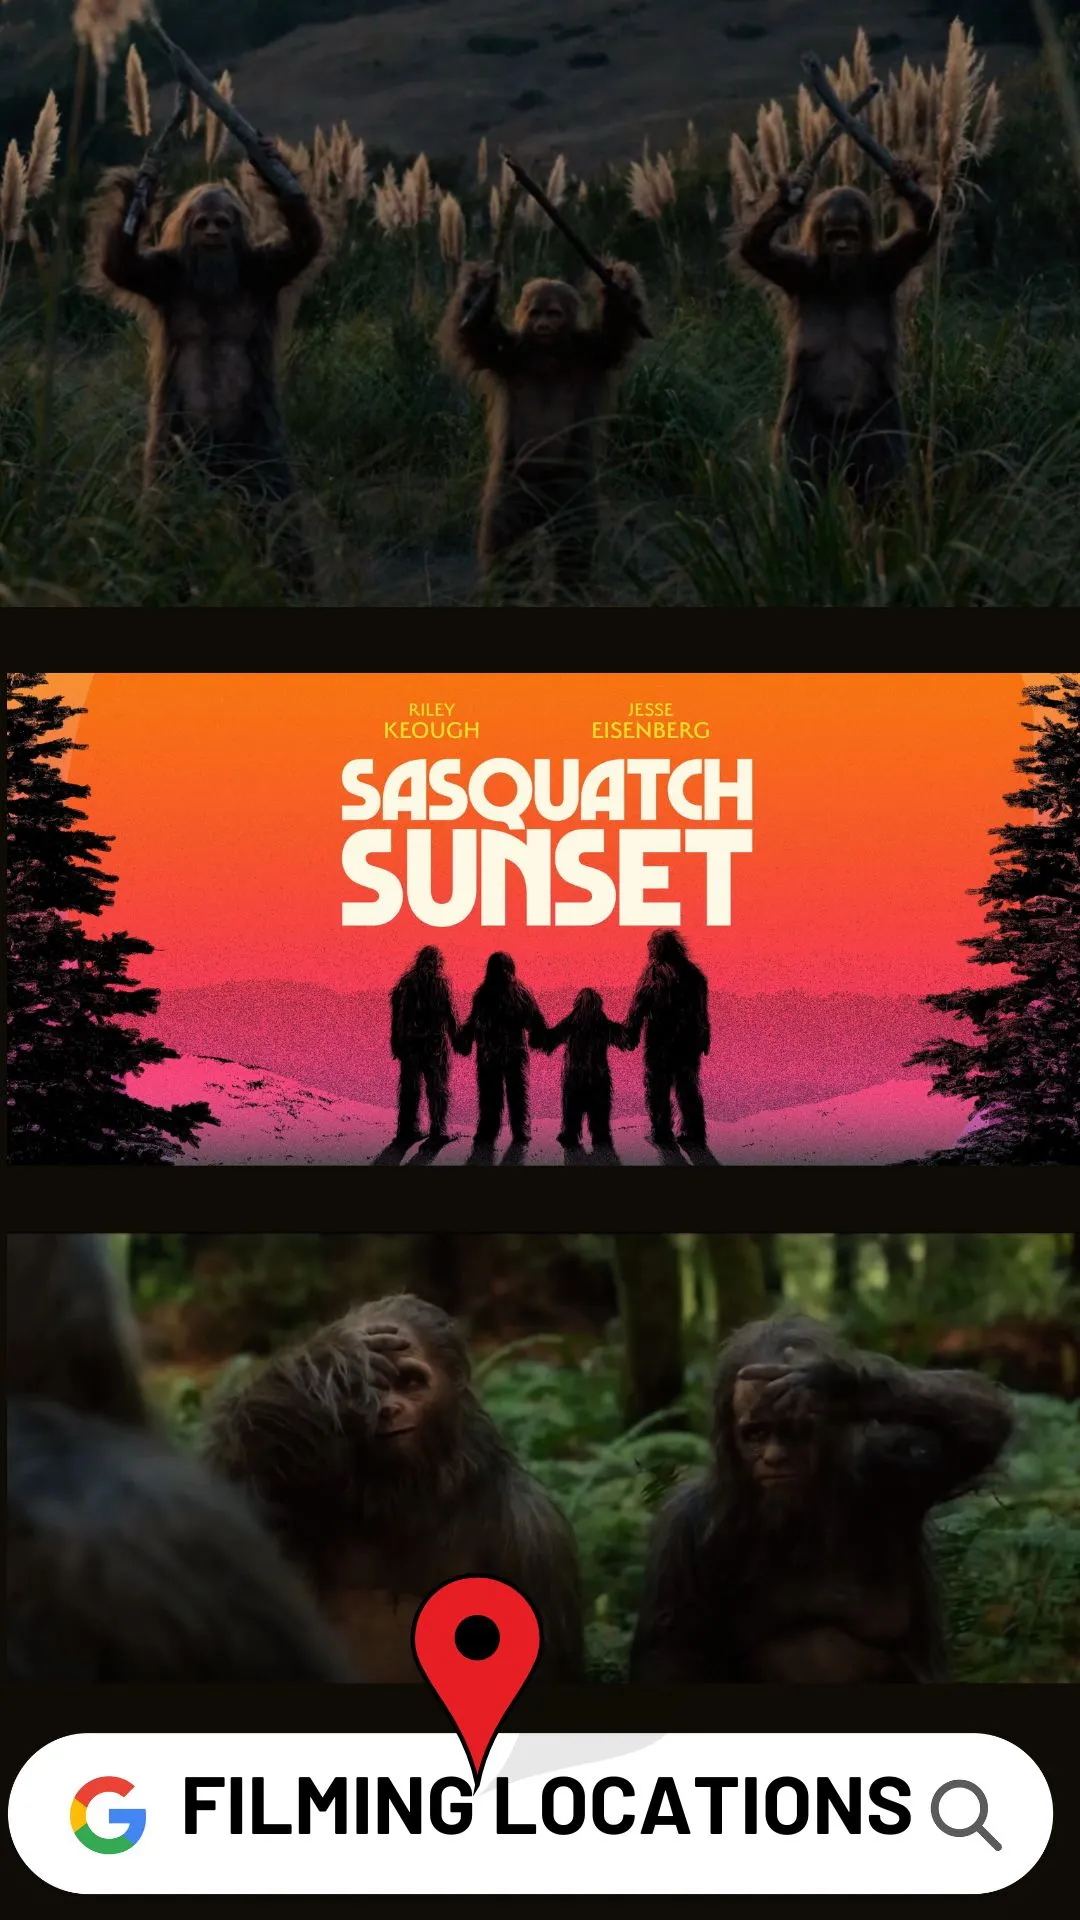 Sasquatch Sunset Filming Locations